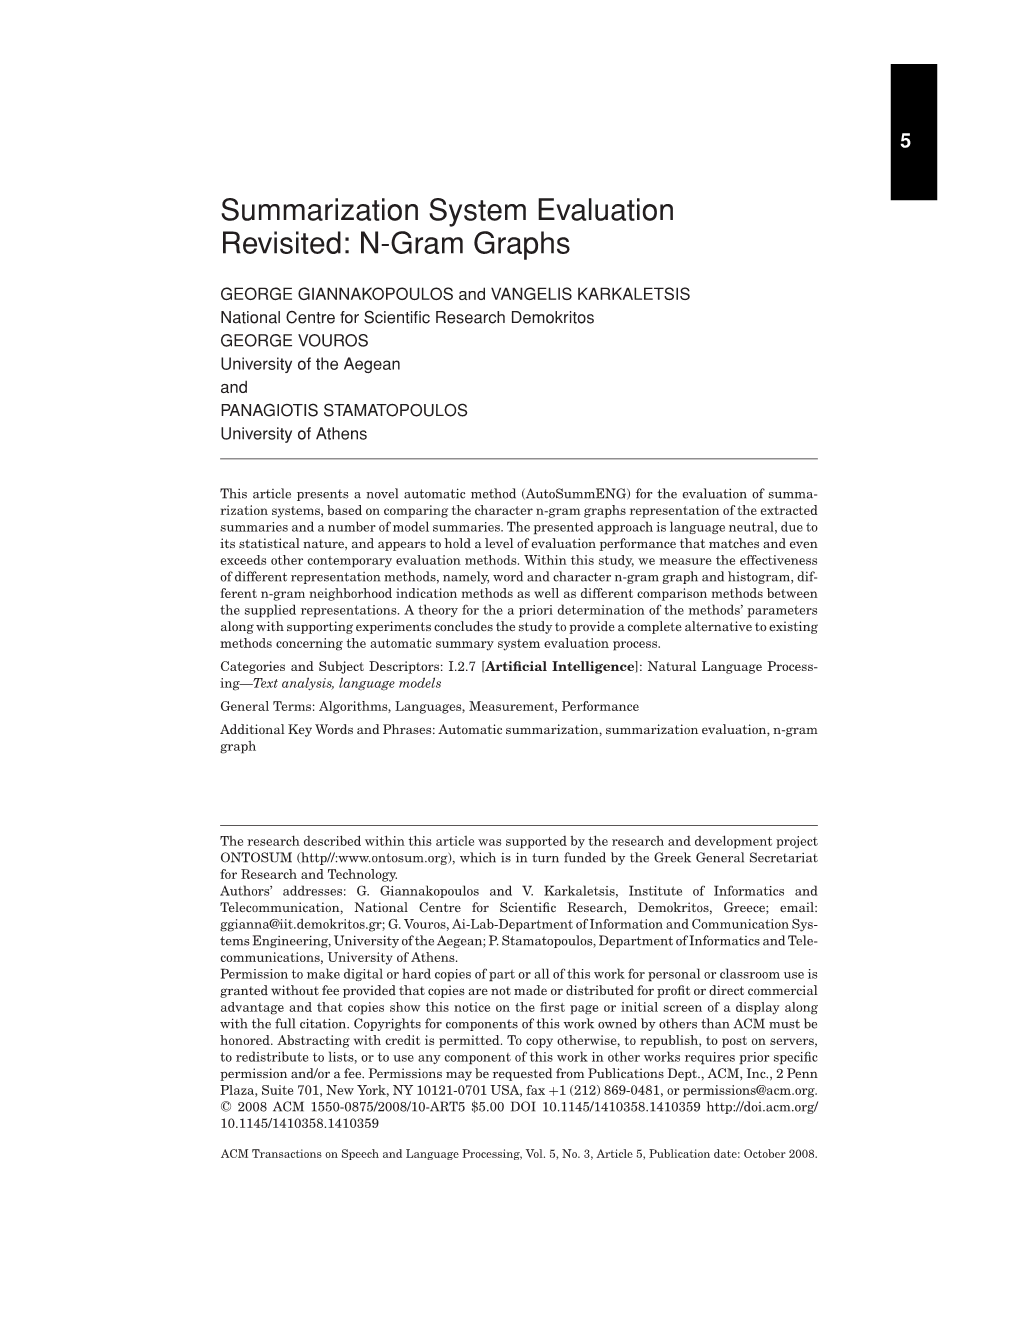 Summarization System Evaluation Revisited: N-Gram Graphs